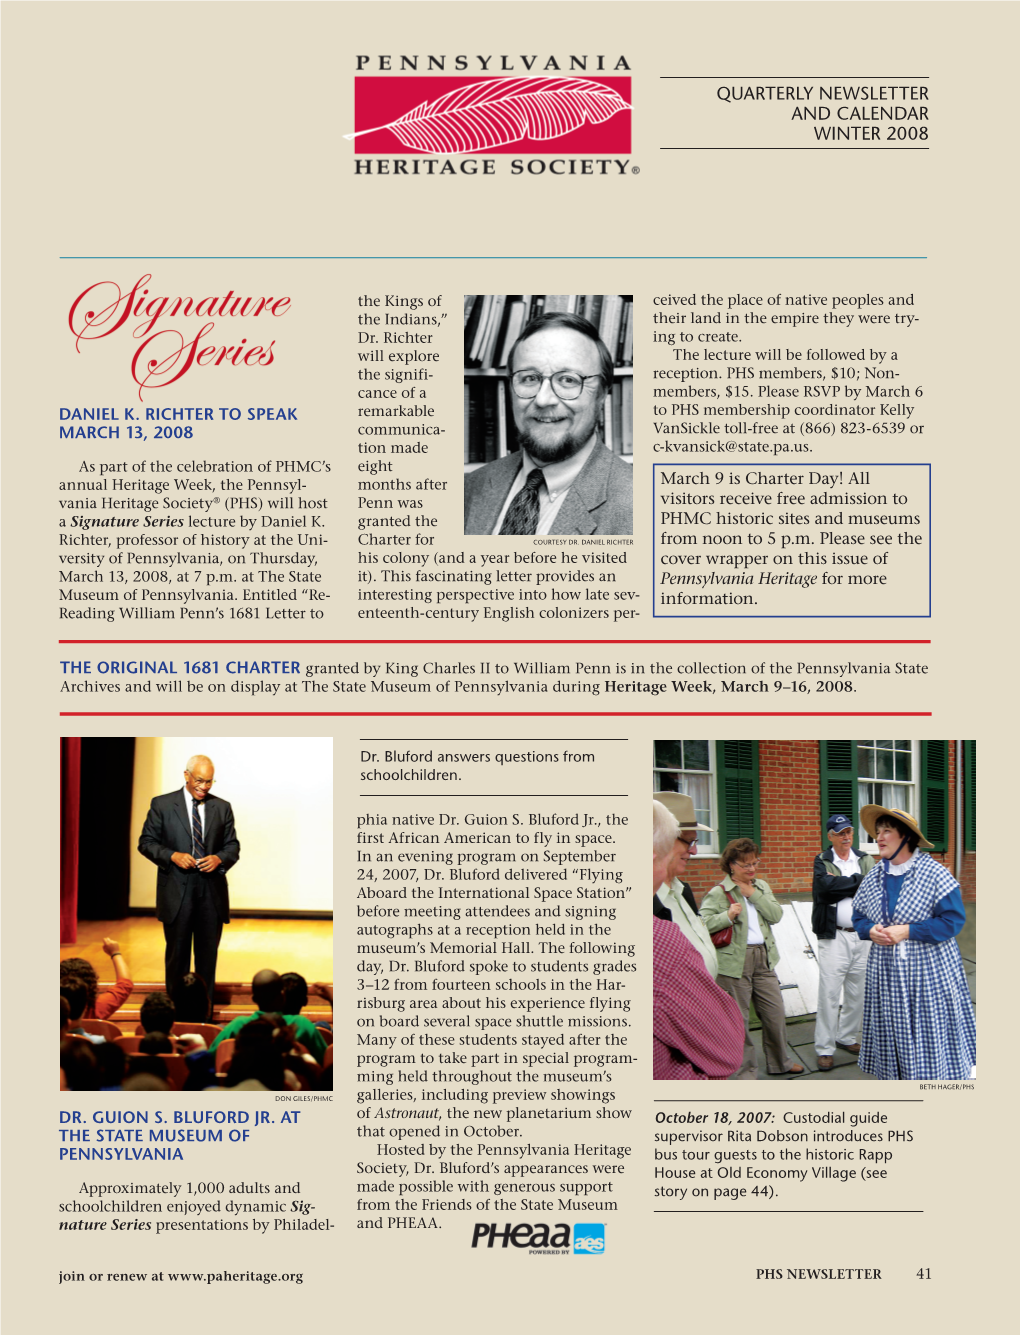 Pennsylvania Heritage Society Newsletter Winter 2008